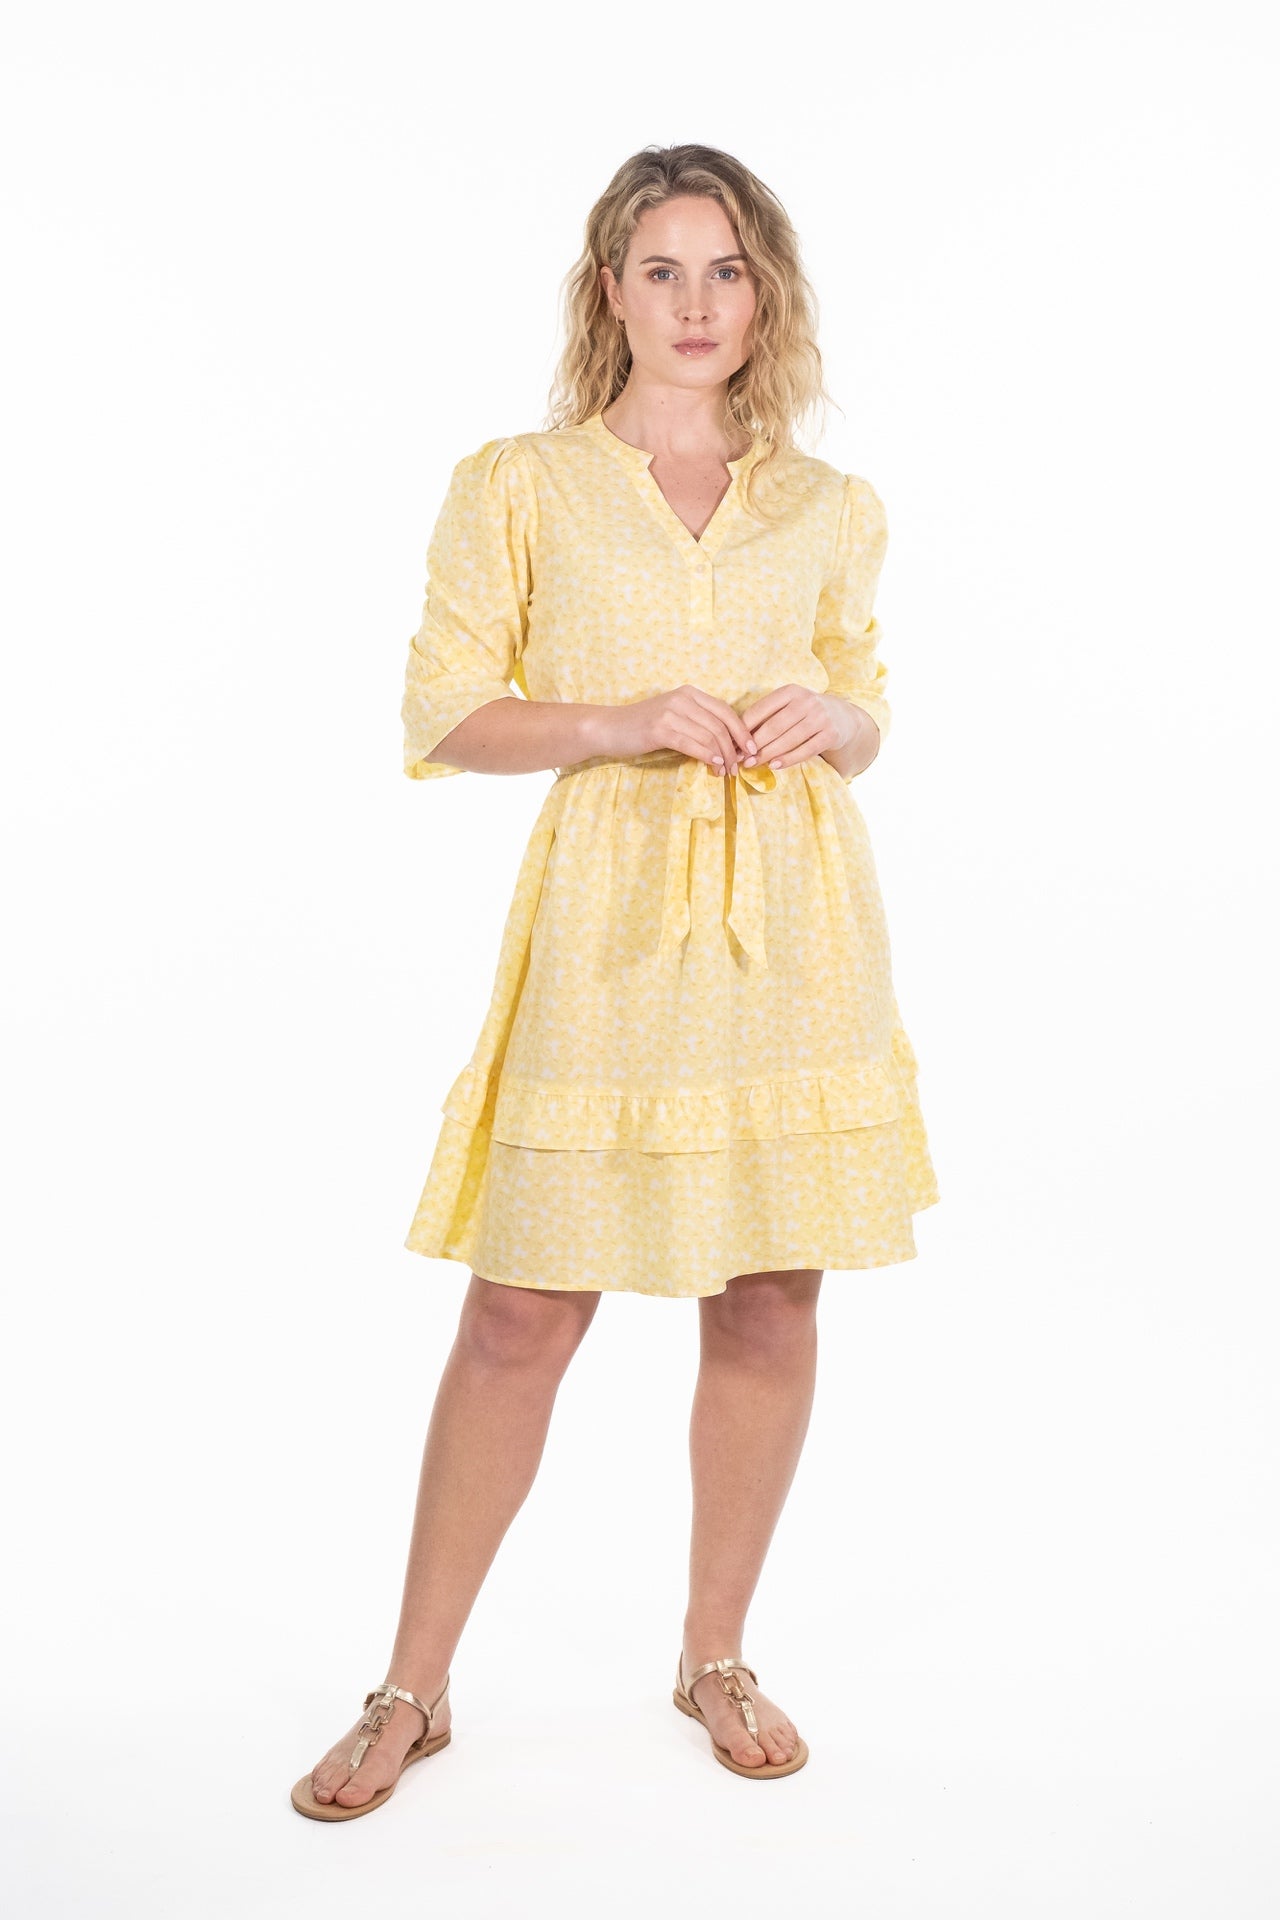 Olivia Yellow Ruffle Dress - Rupert and Buckley - Dress